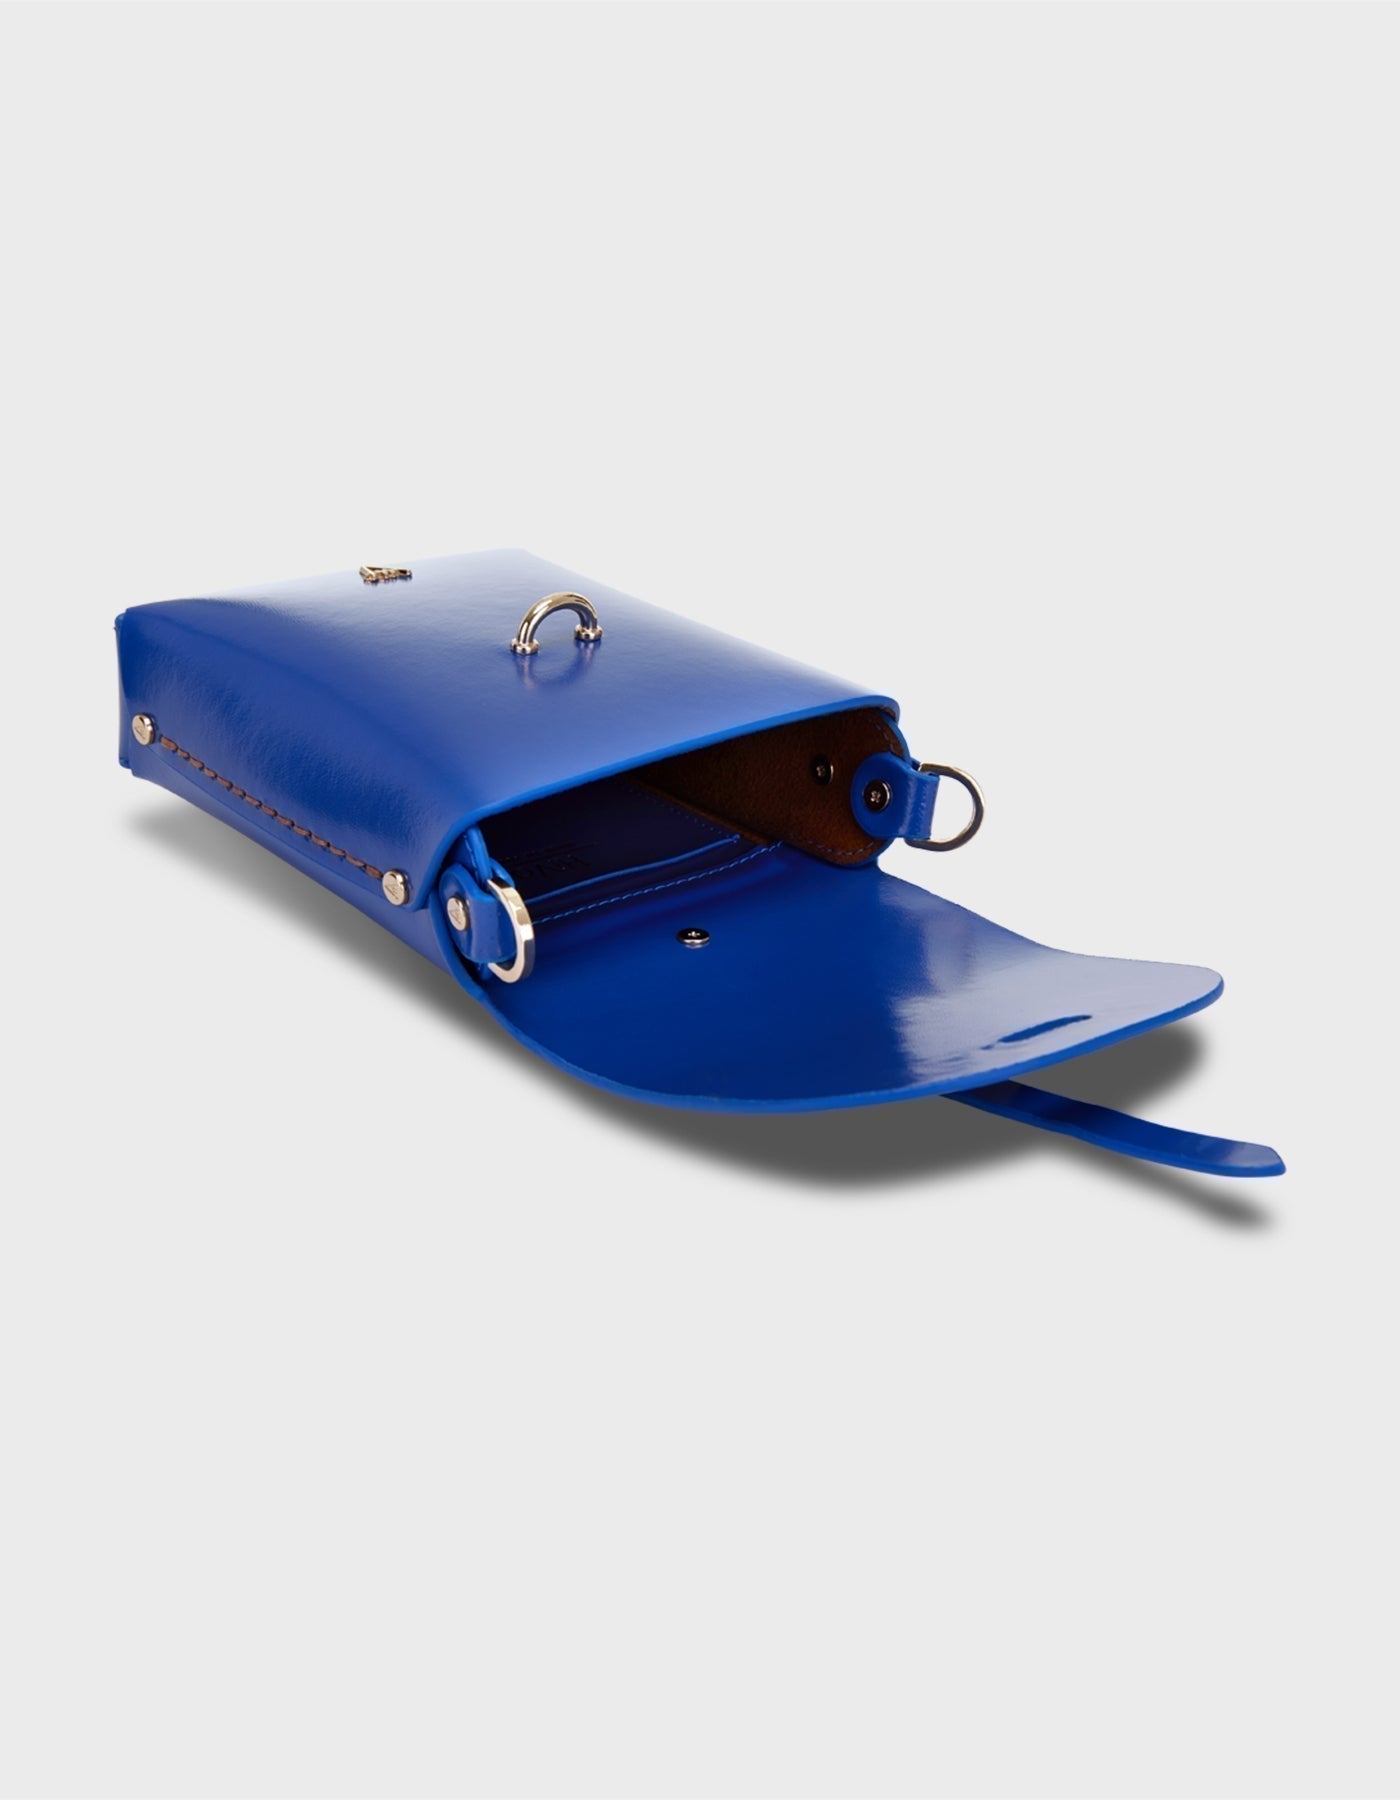 Hiva Atelier | Mini Astrum Shoulder Bag Sodalite Blue | Beautiful and Versatile Leather Accessories